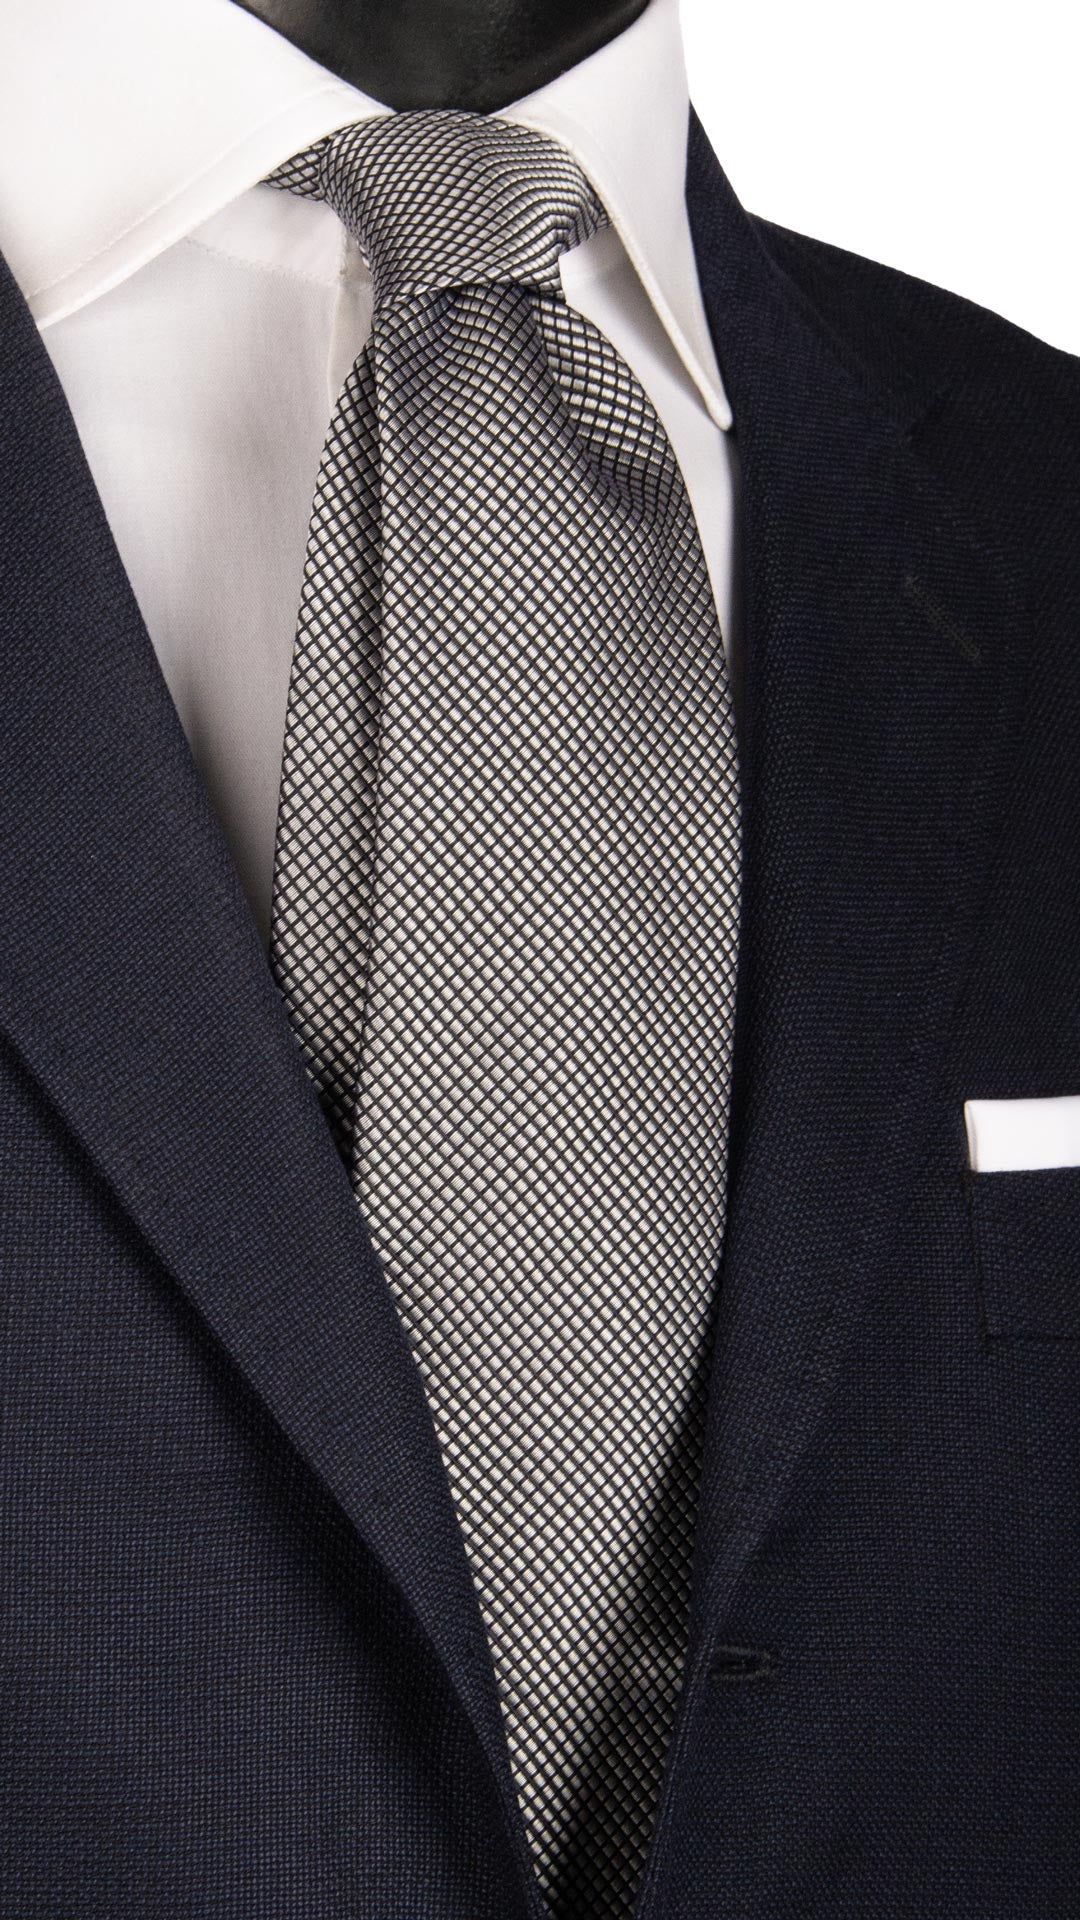 Cravatta da Cerimonia di Seta Nera Grigia Argento Made in Italy Graffeo Cravatte